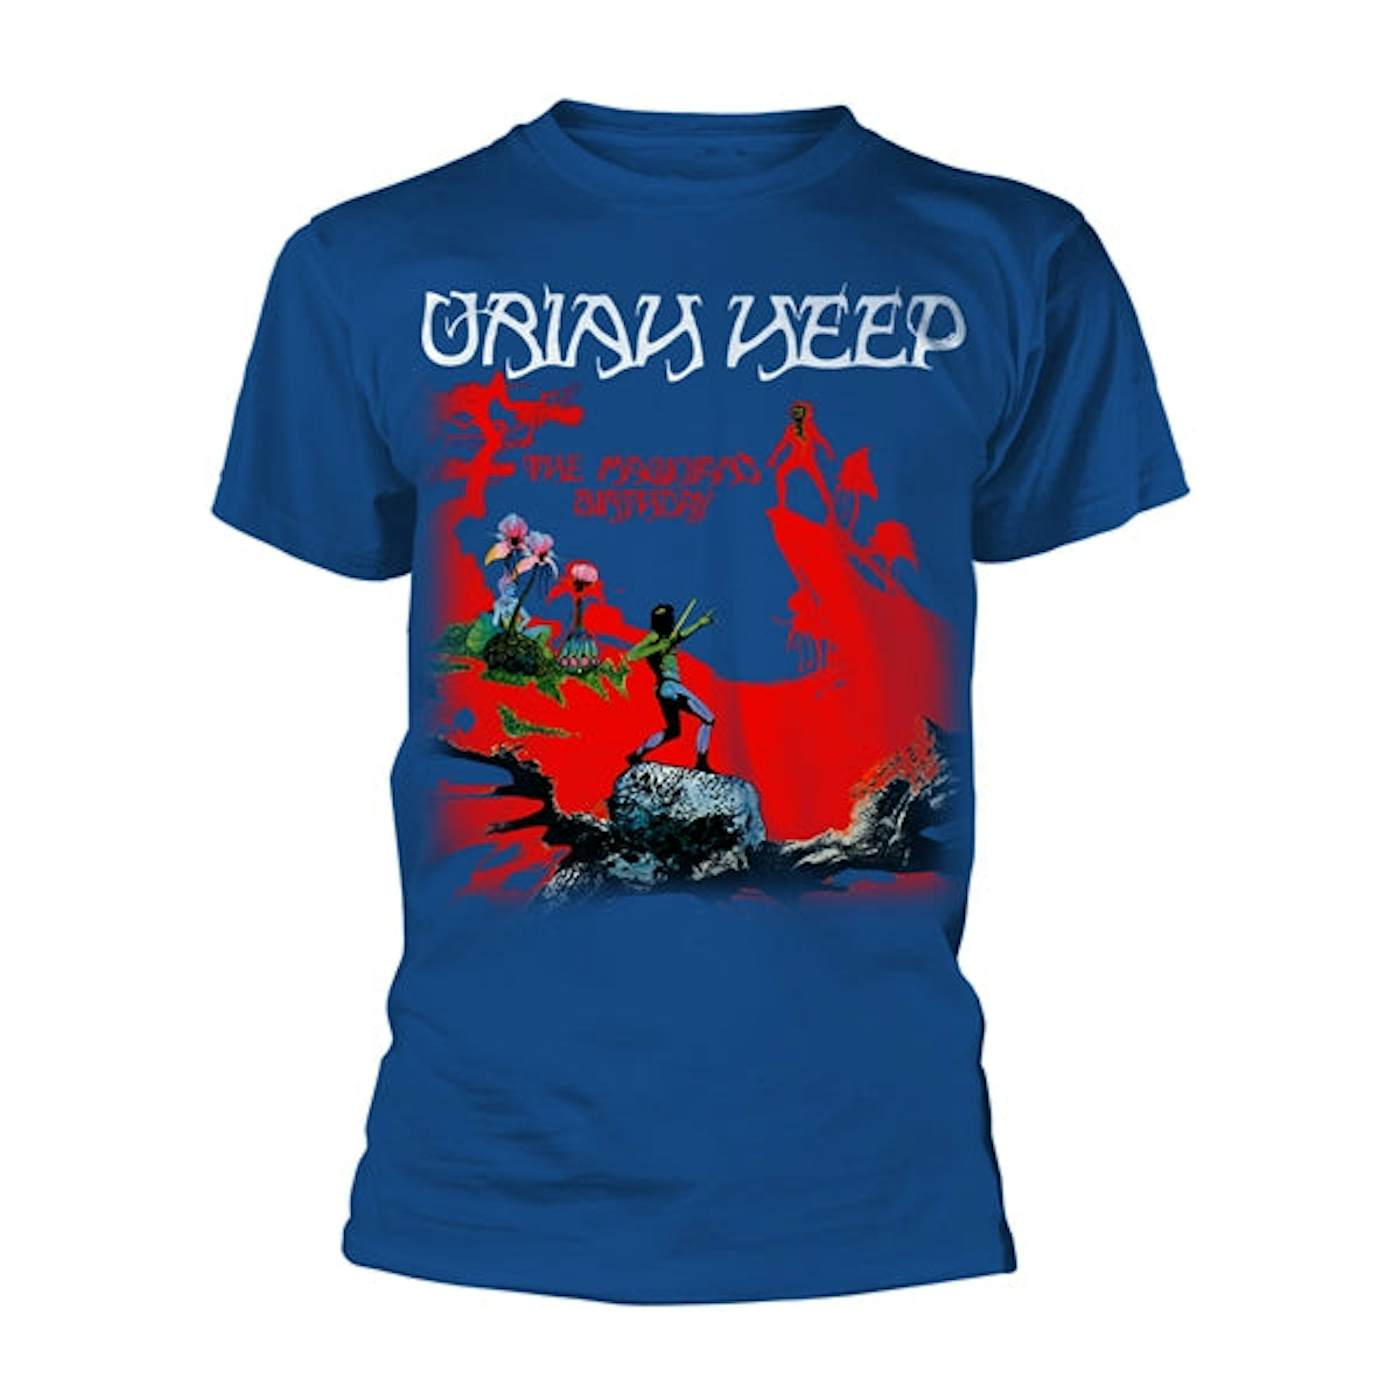 Uriah Heep T-Shirt - The Magicians Birthday (Blue)